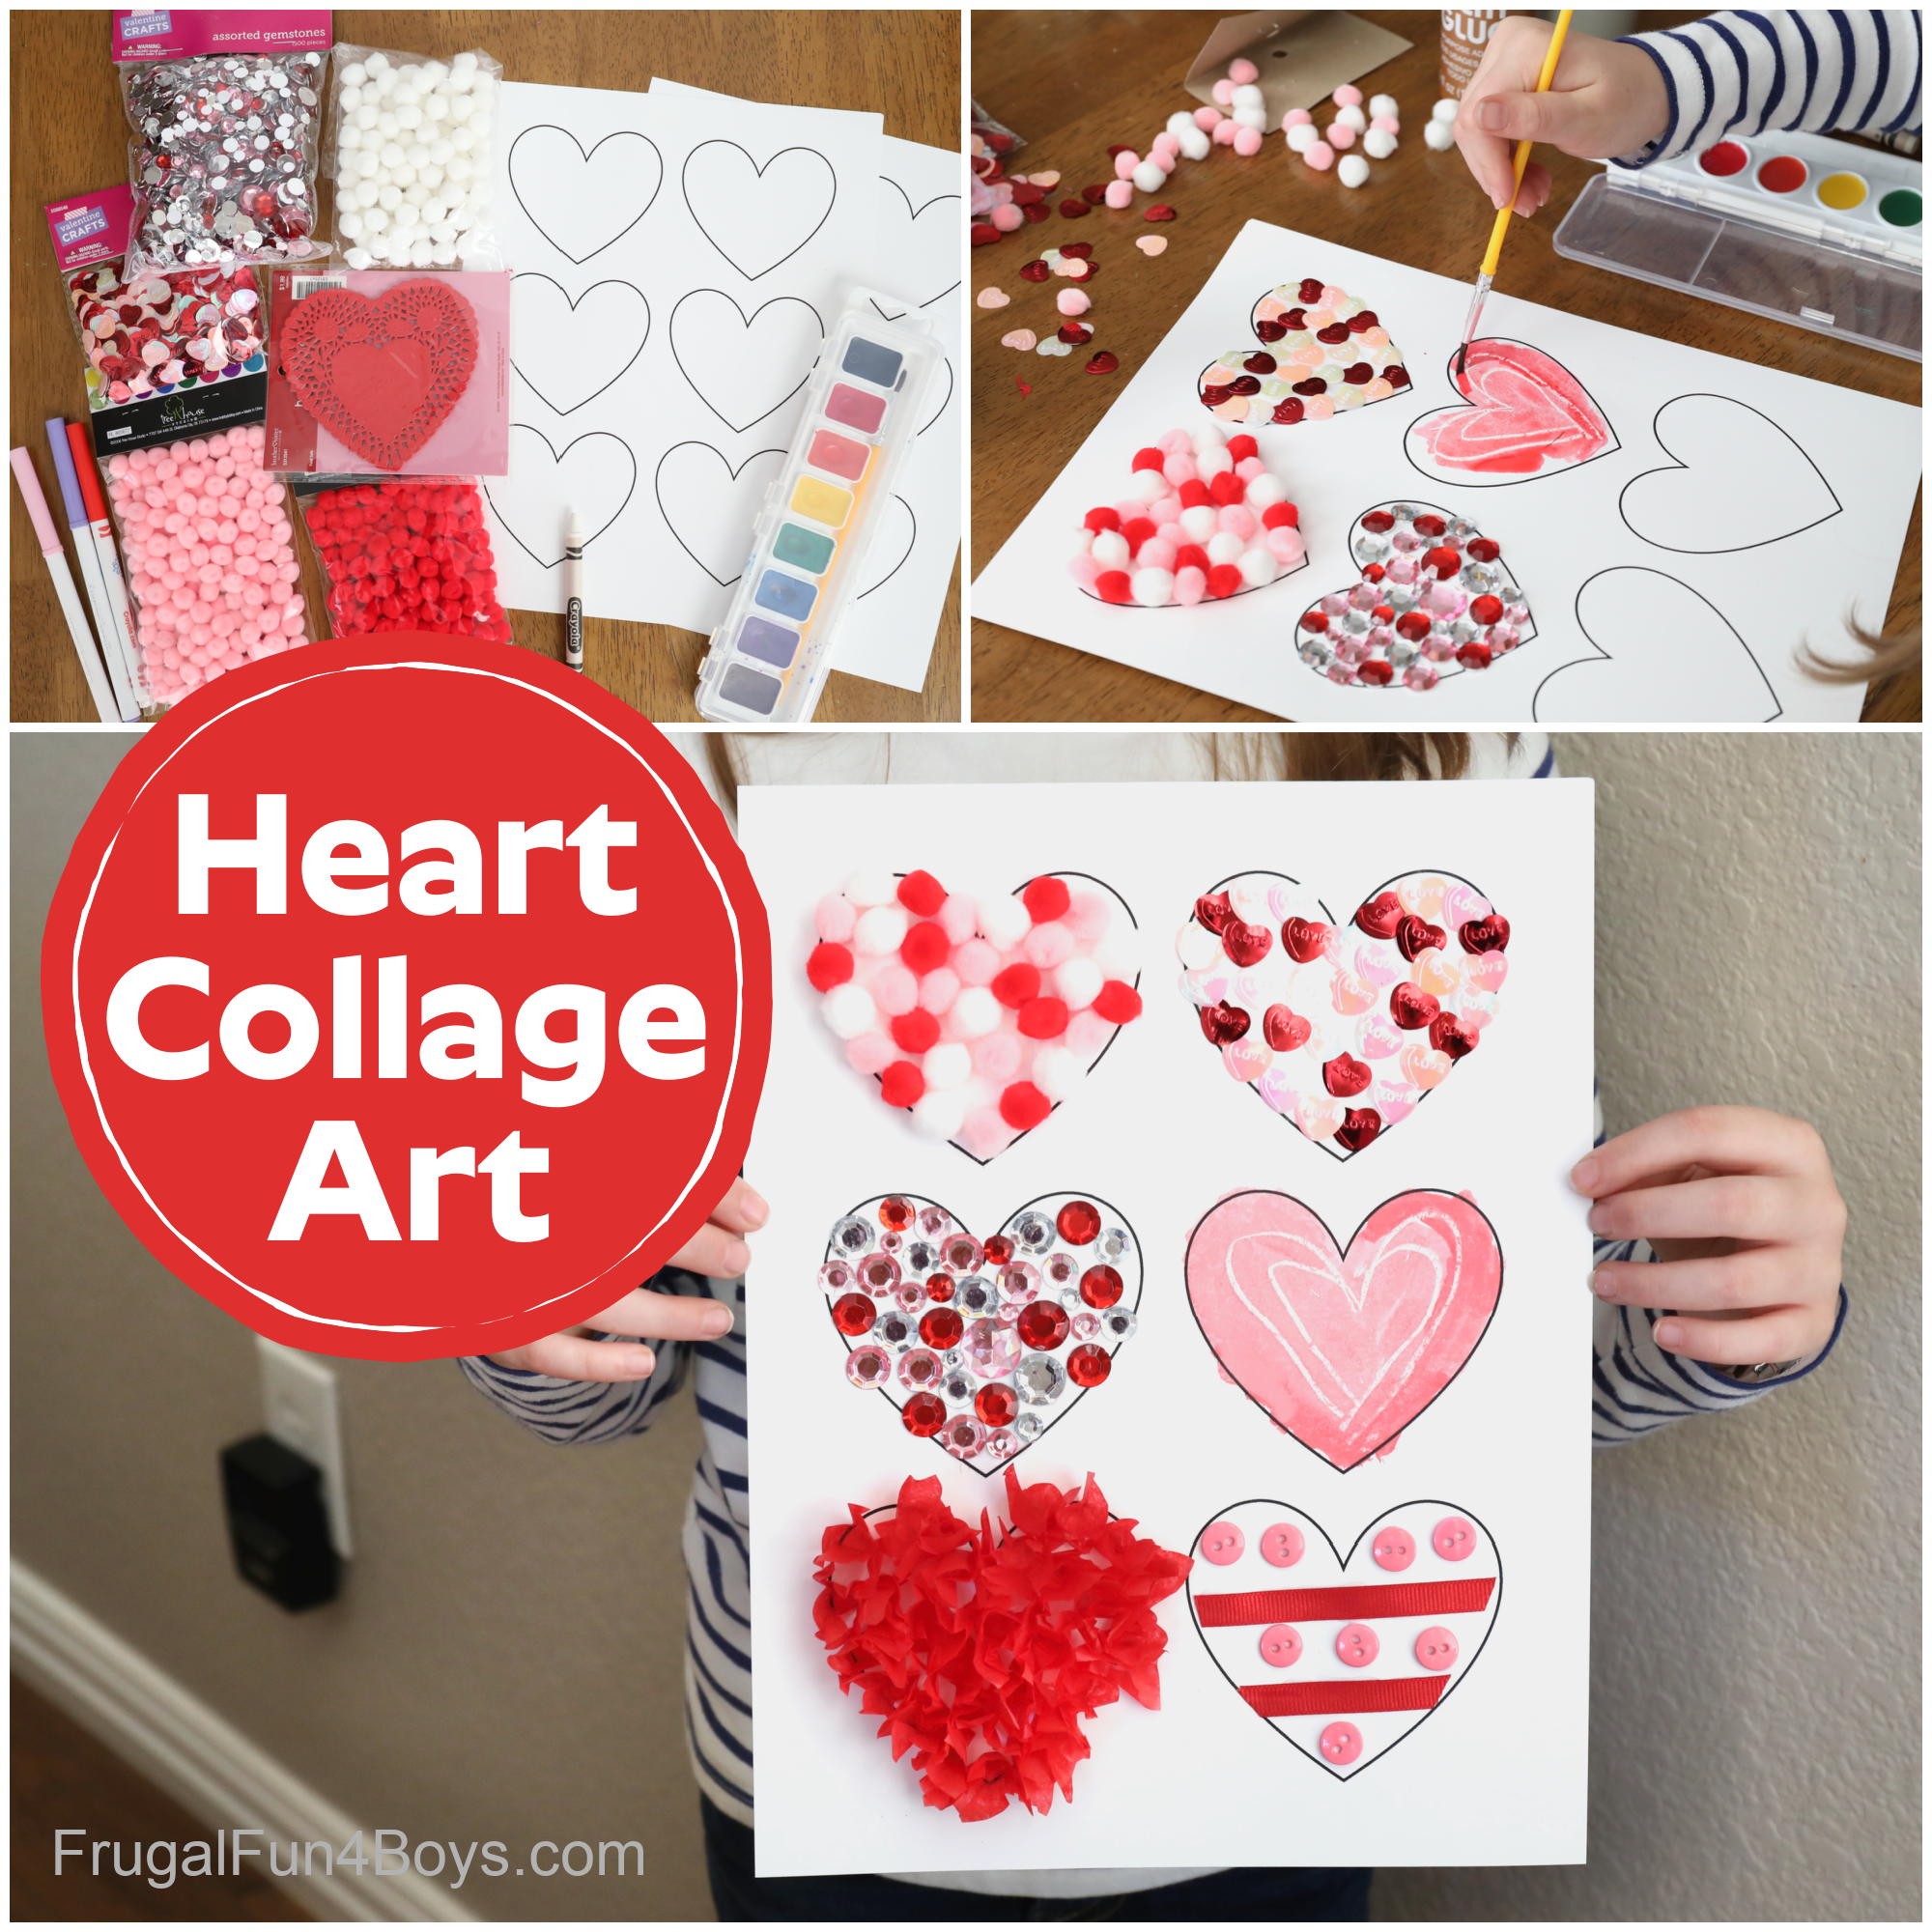 Heart Collage Art